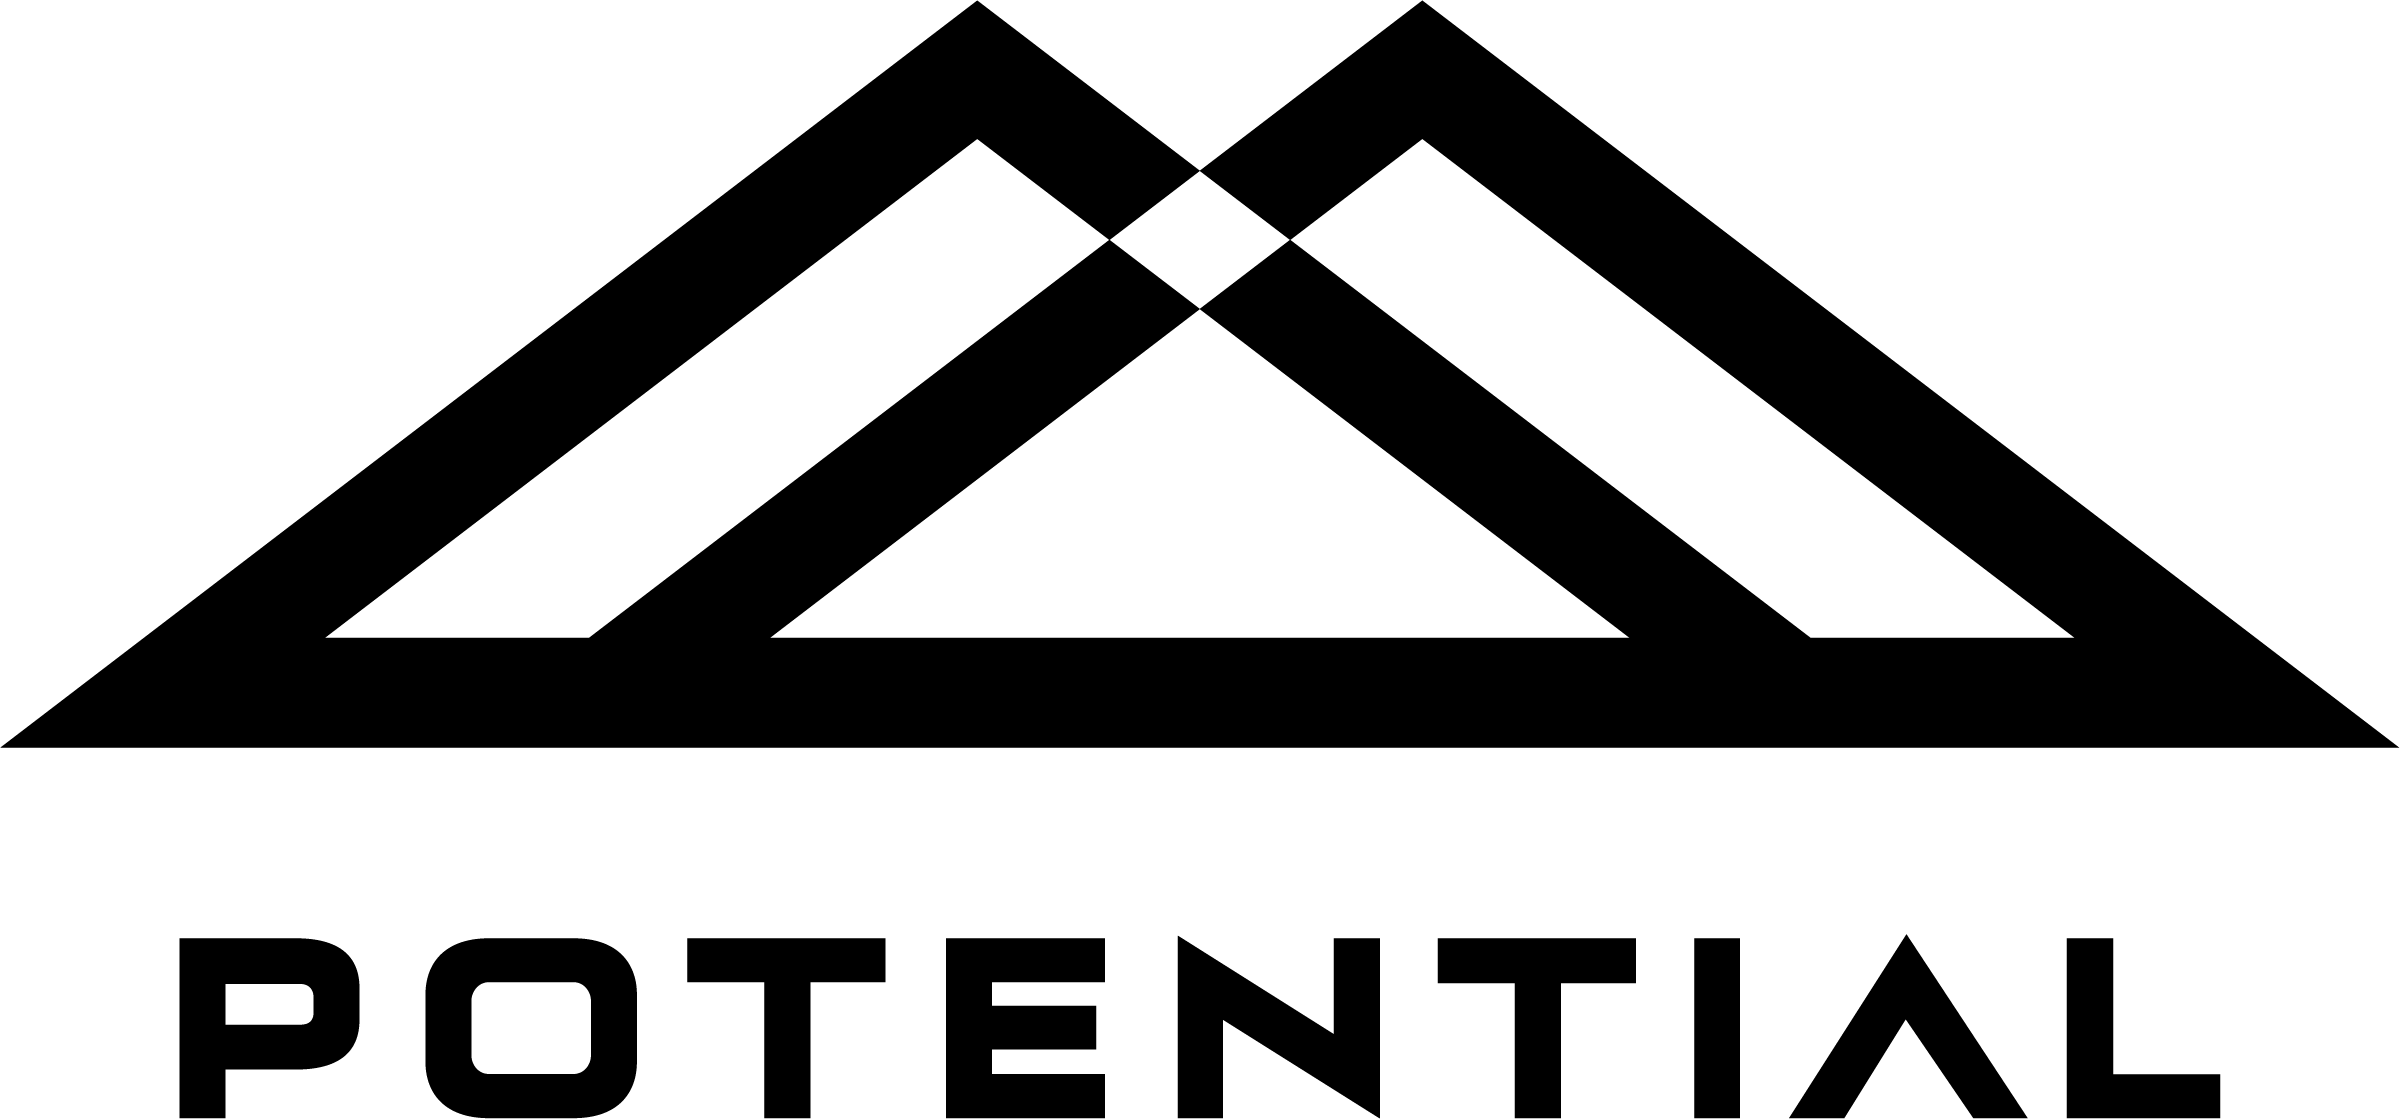 Potential motors logo